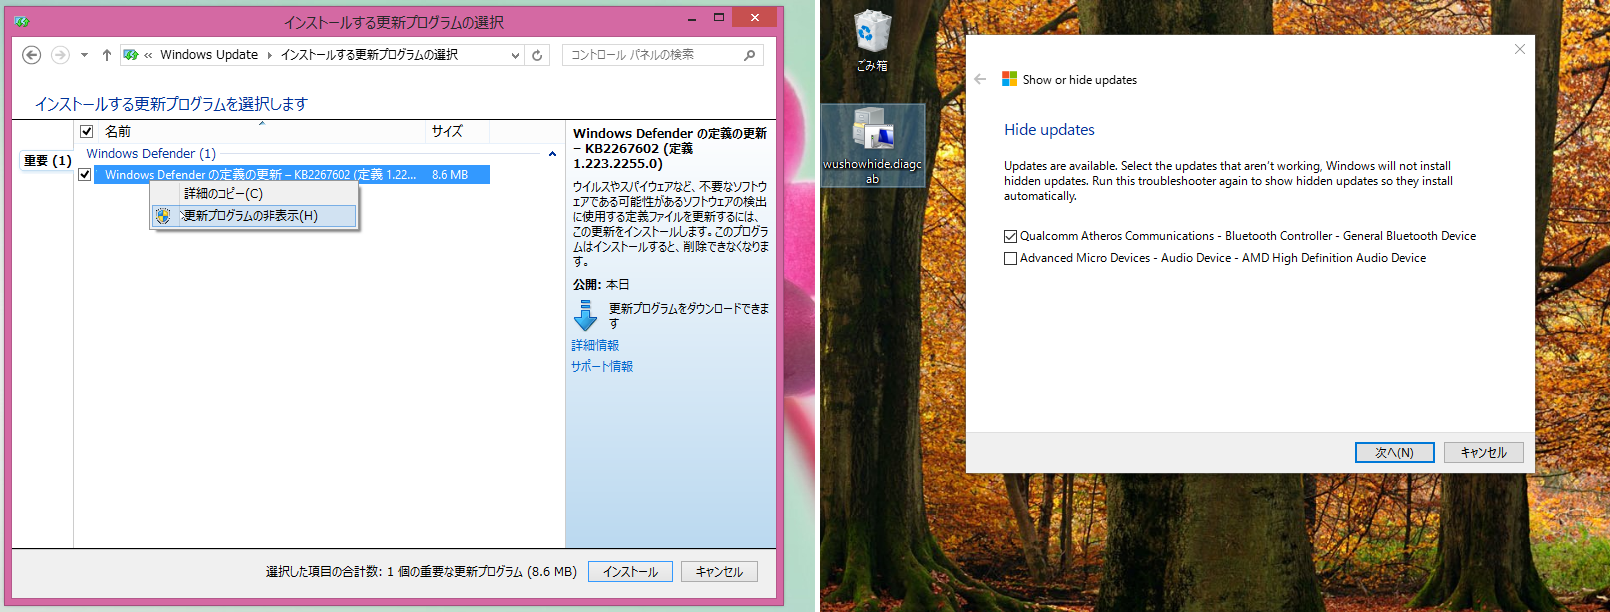 2@Windows 8.1ȑOWindows Update̕W@\ƂčXVvO\ɂłiʍjBWindows 10Windows Updateɂ͍XVubN@\͂ȂAuShow or hide updatesvc[_E[hĎsKviʉEj